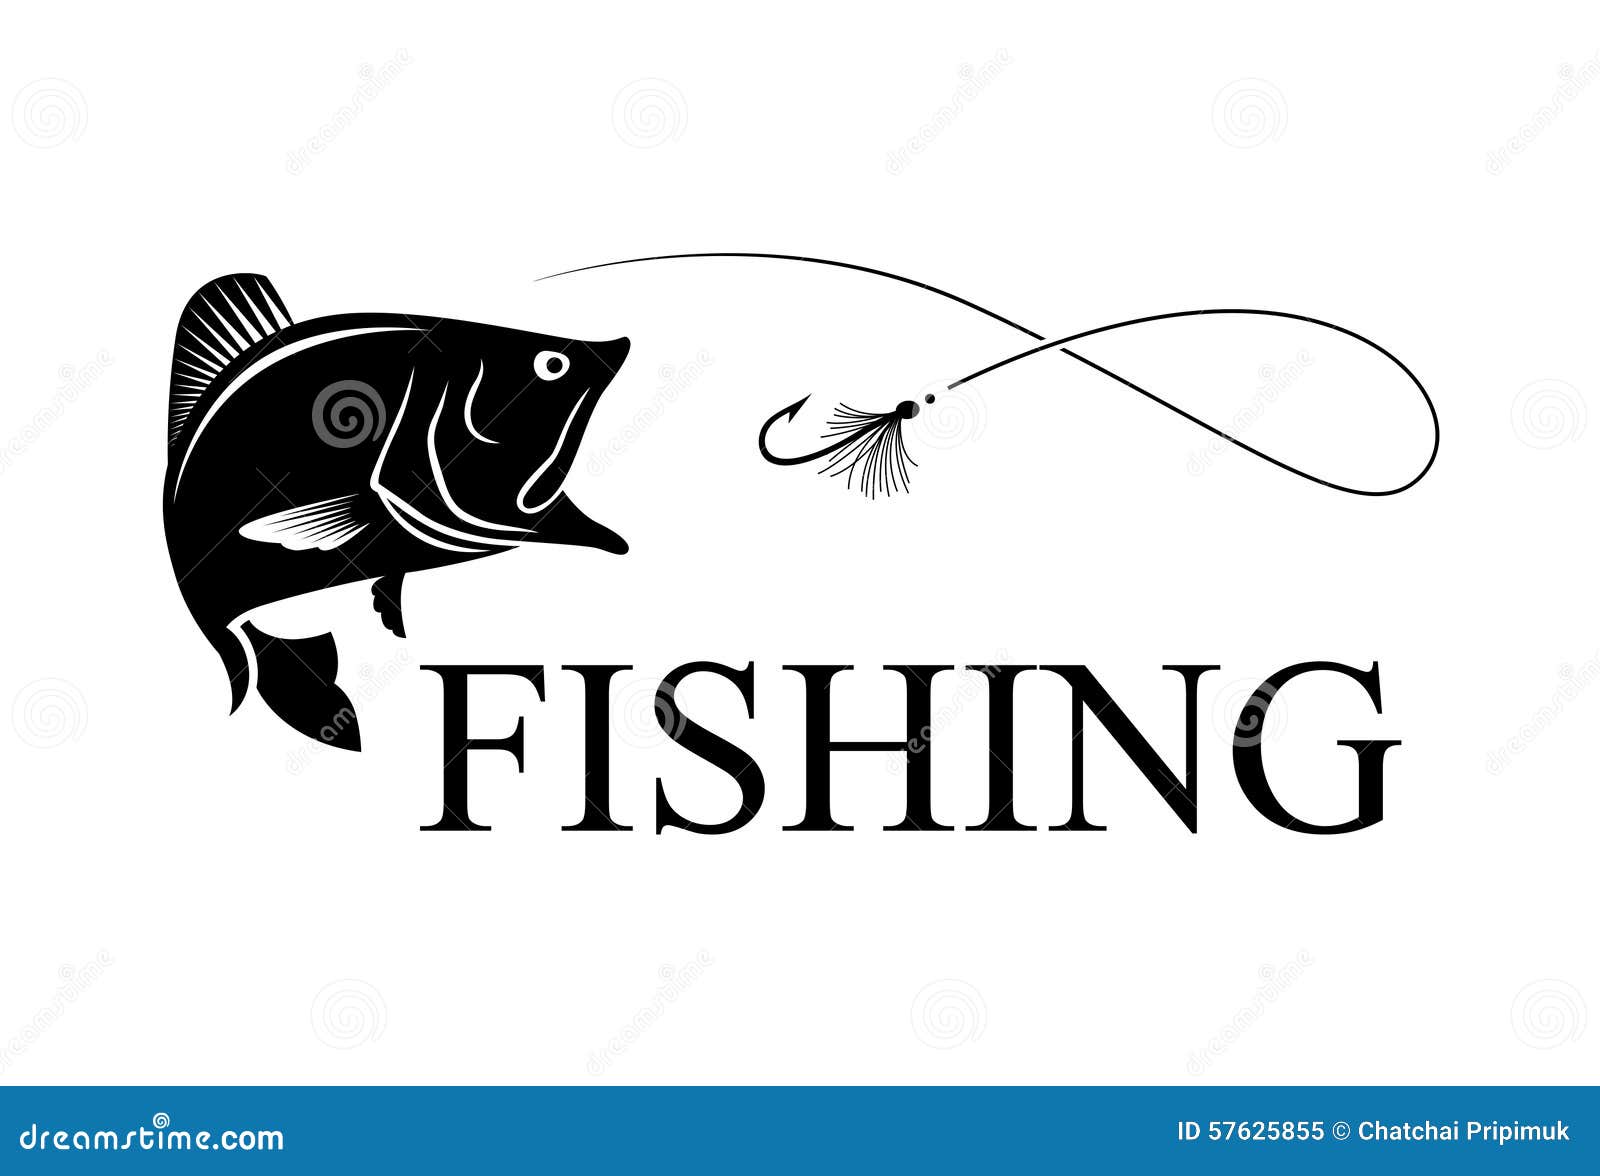 Fishing bass stock vector. Image of character, symbol - 57625855